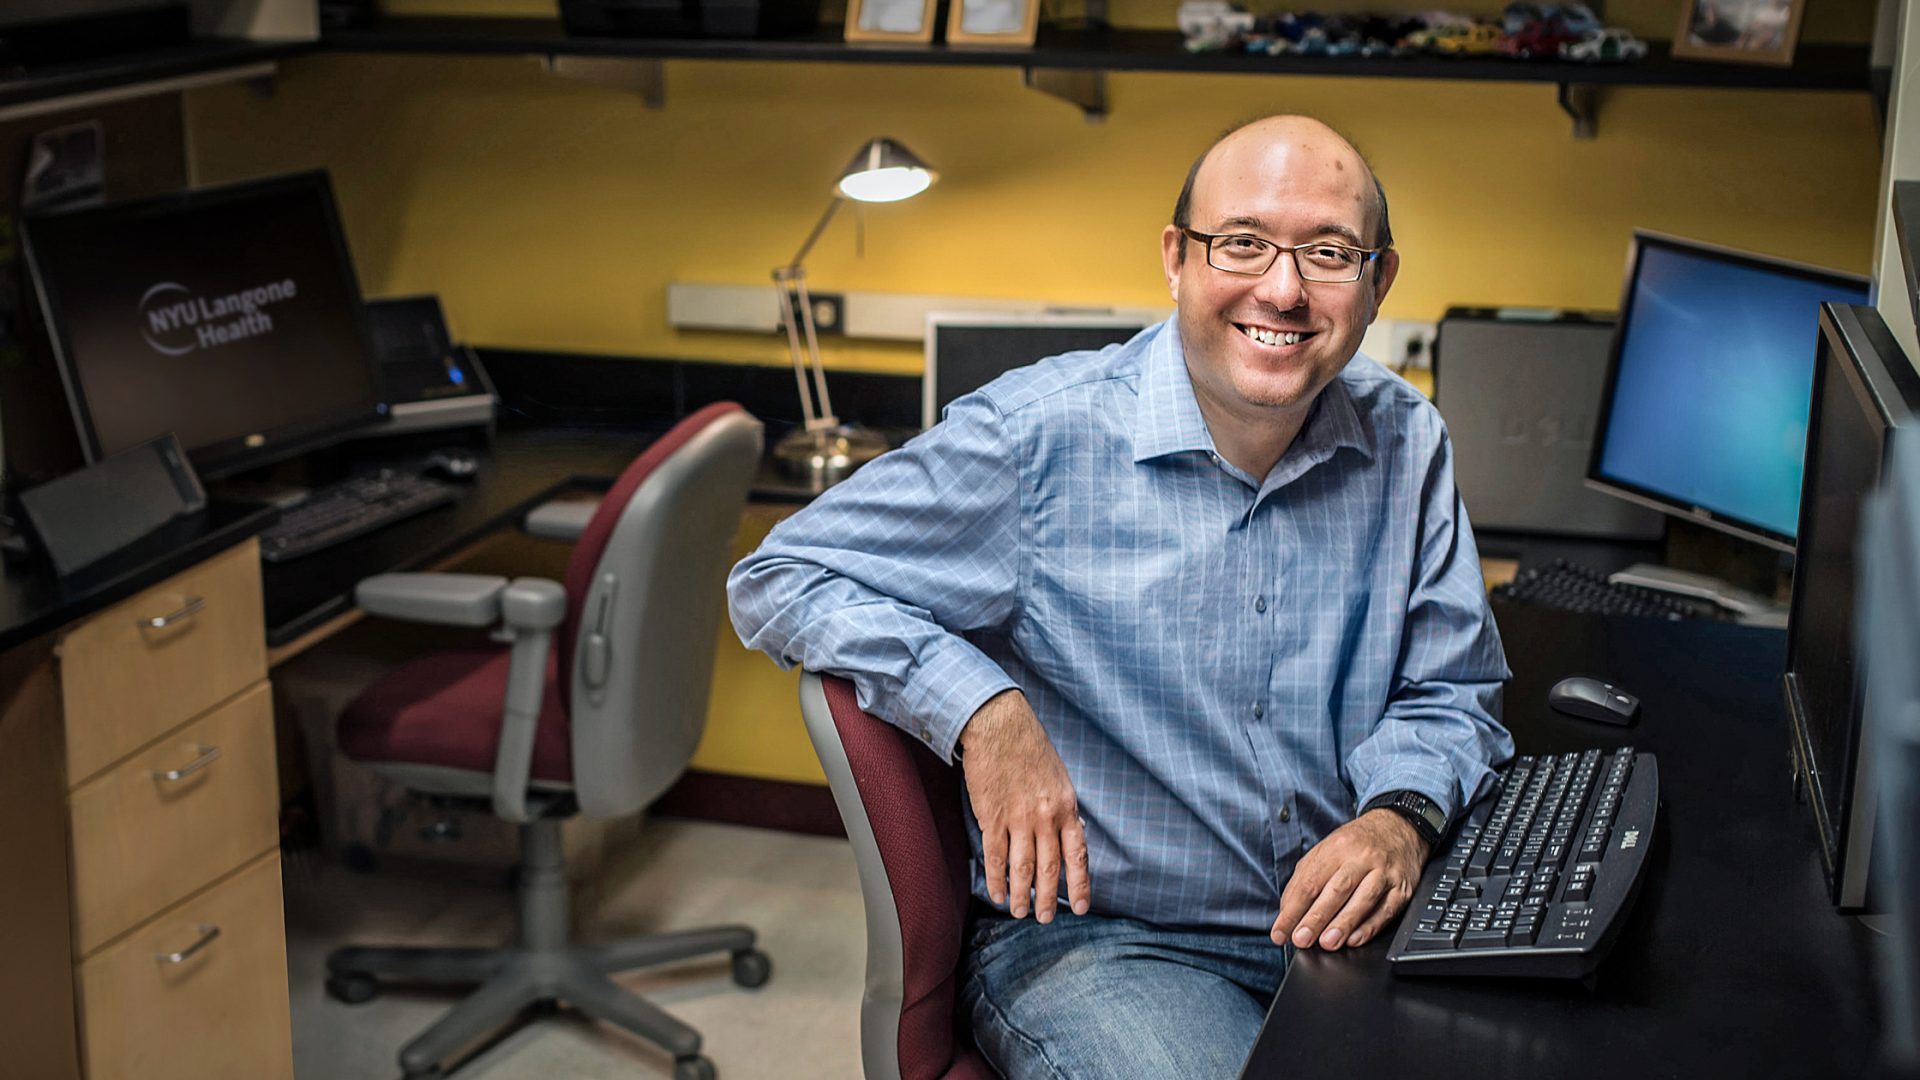 Dr. David M. Landsberger seated a computer desk and smiling